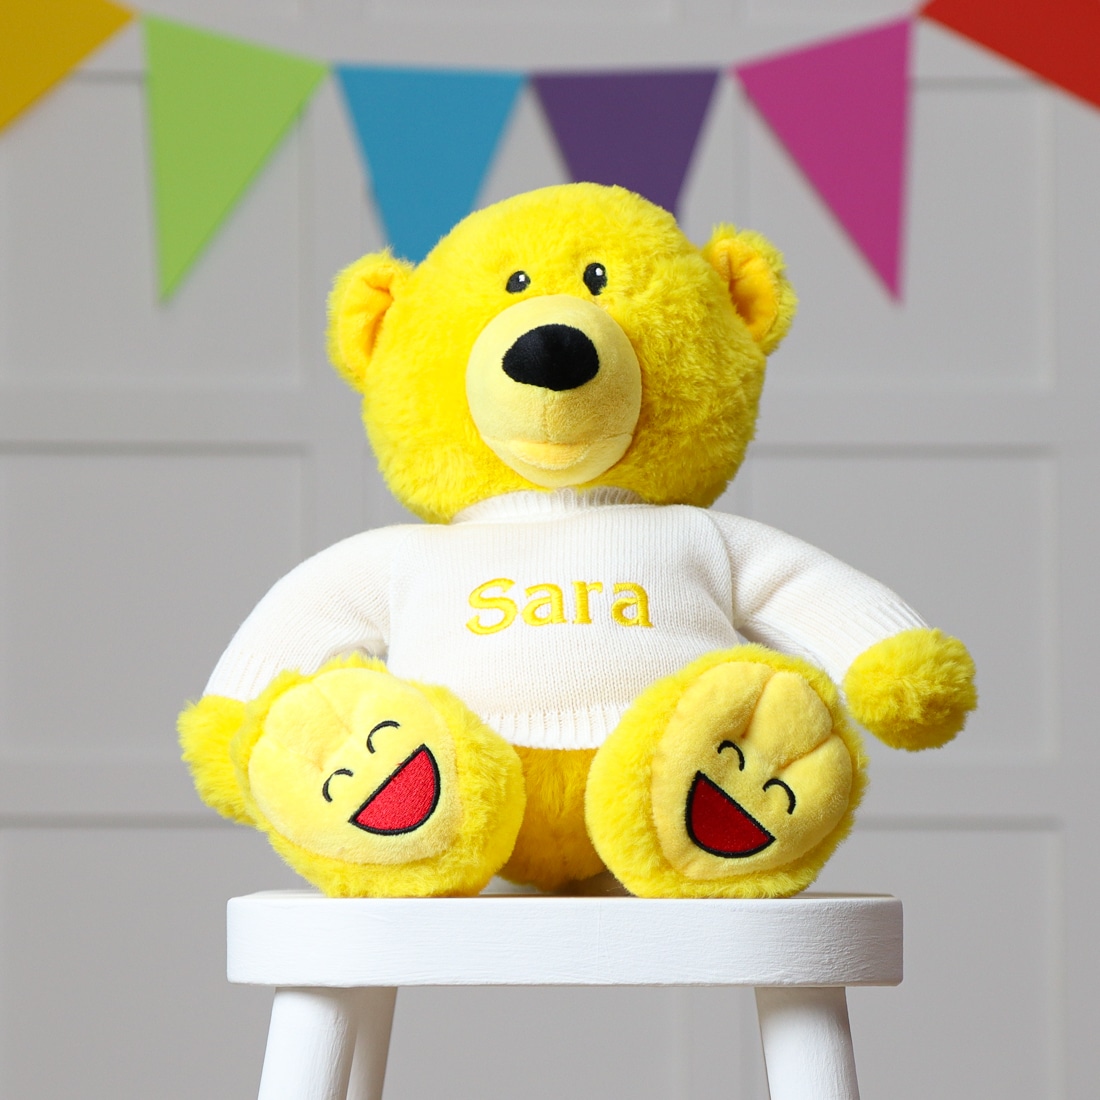 Sara yellow teddy